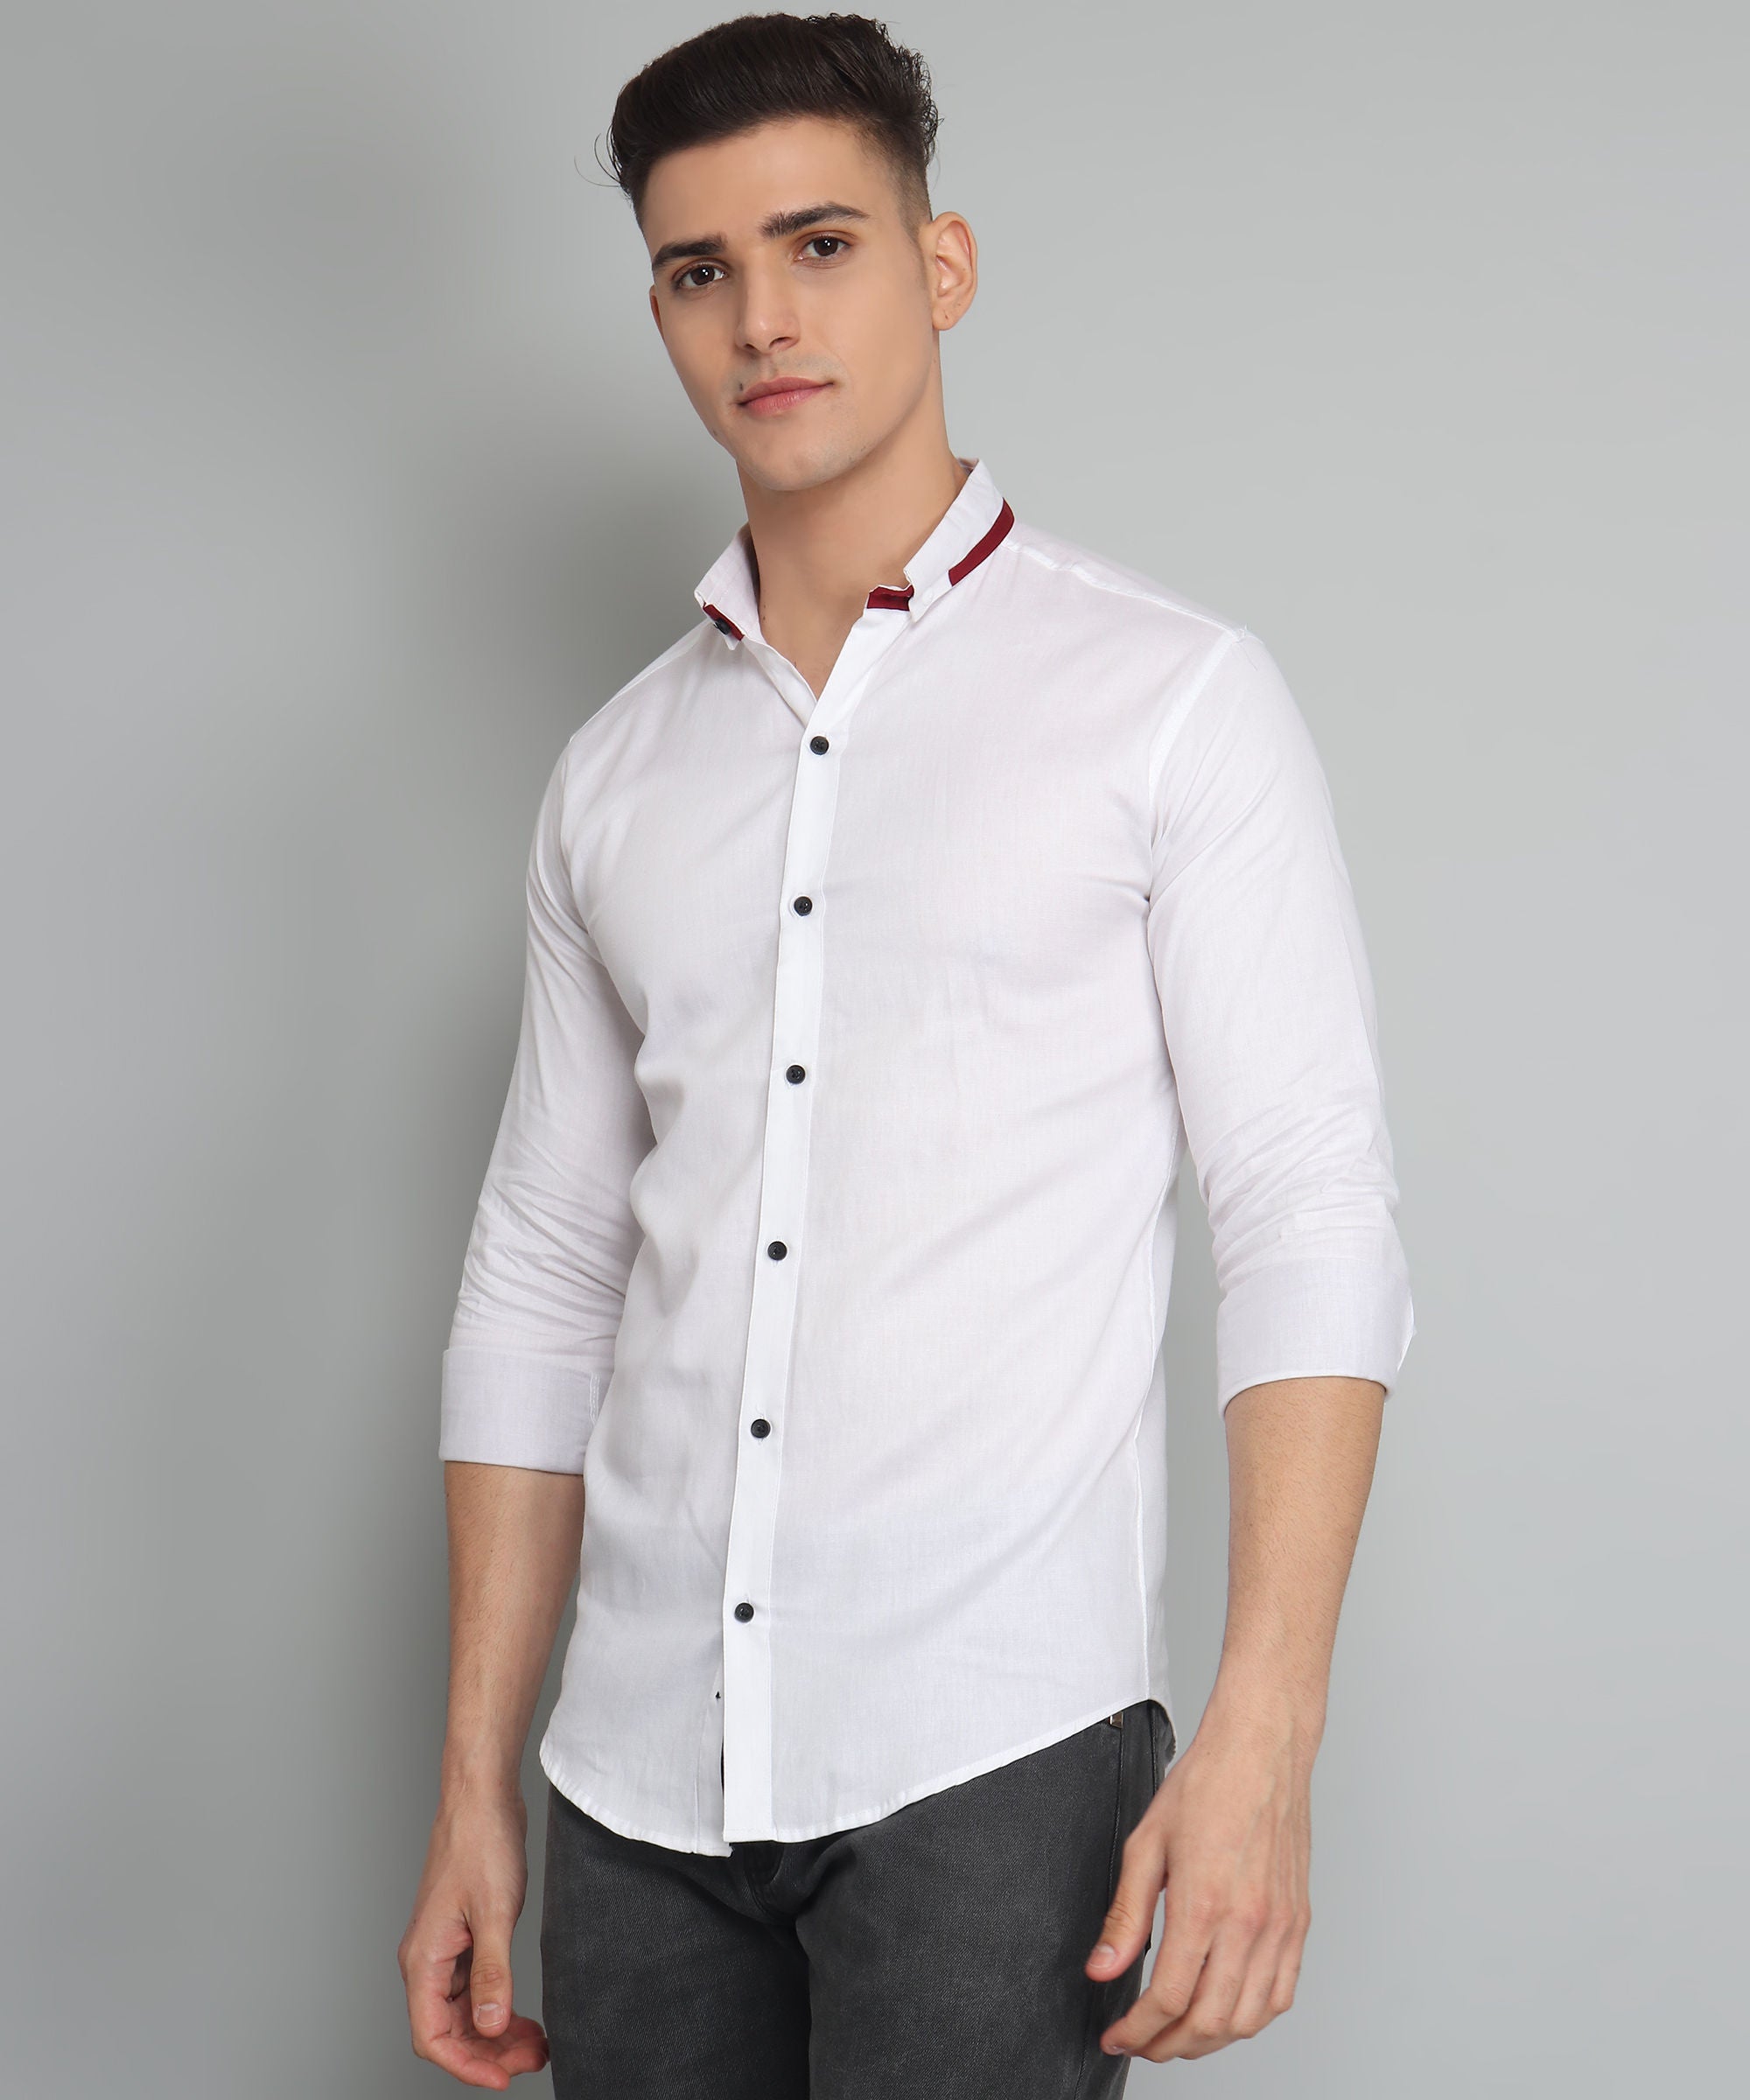 Rough Premium White Solid Casual Cotton Dress Shirt For Men